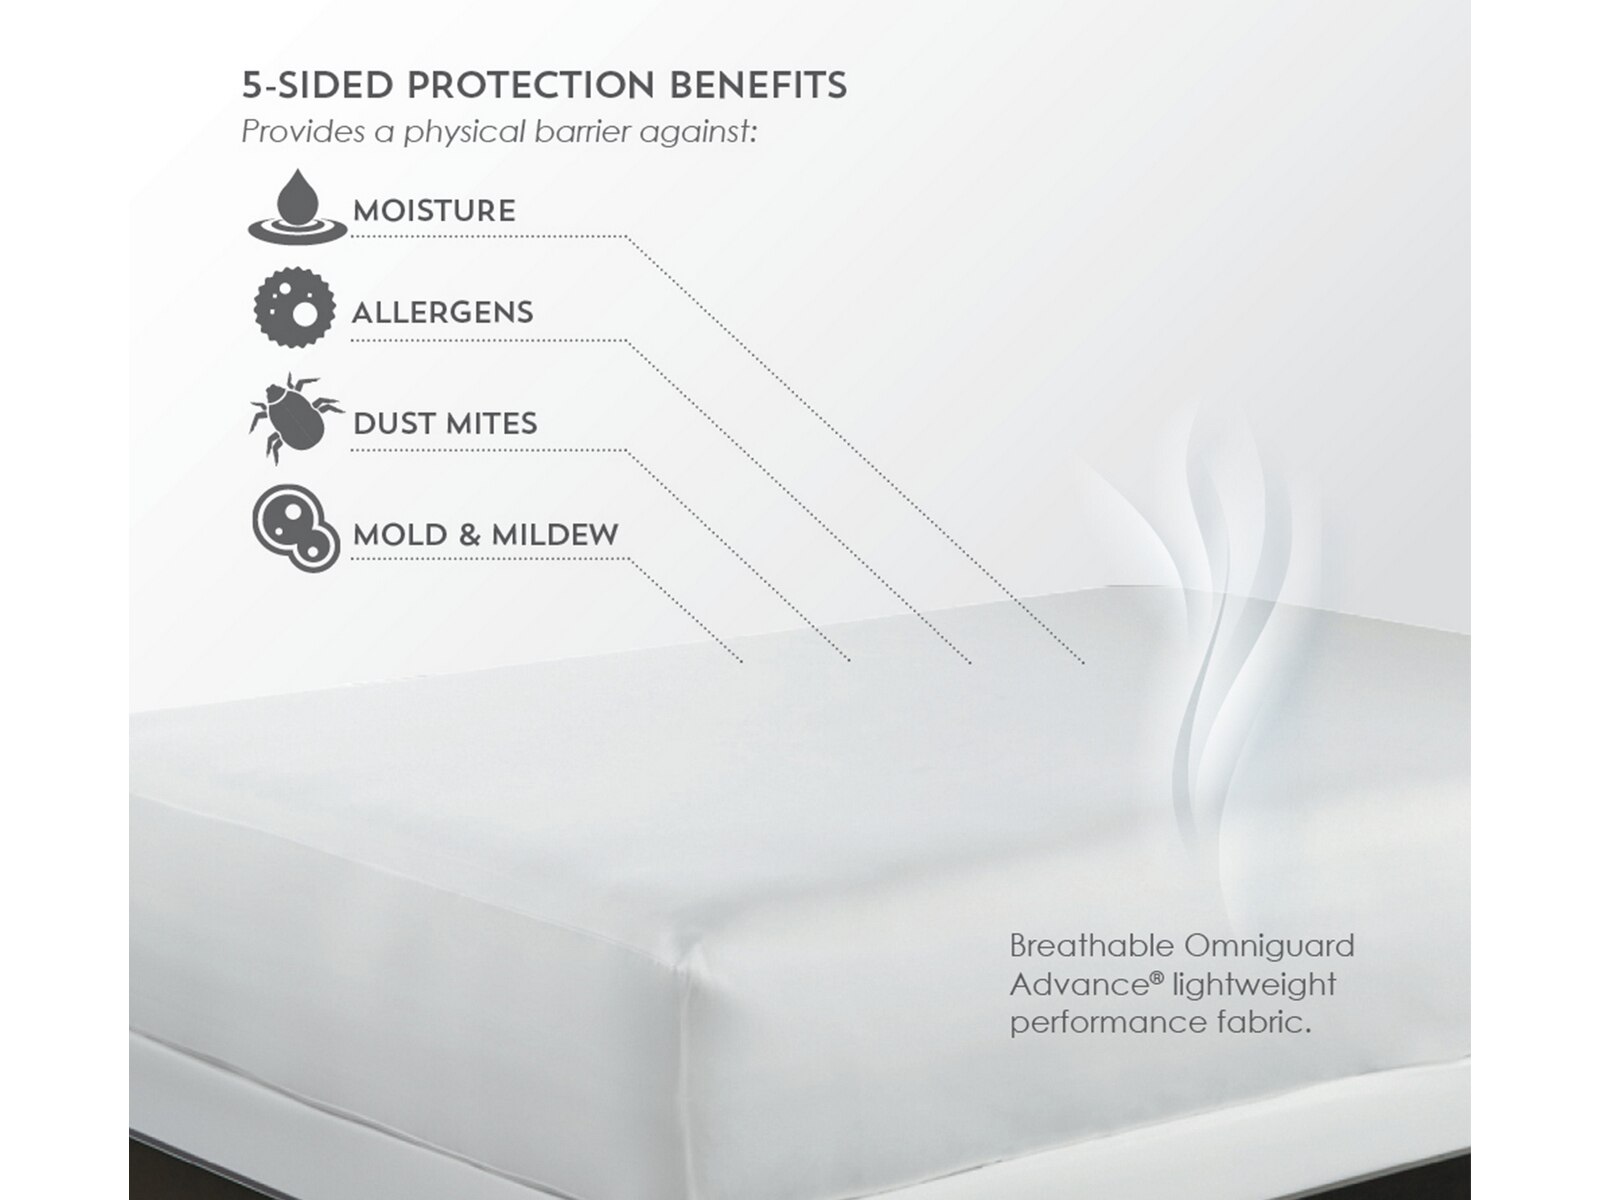 purecare mattress protector warranty